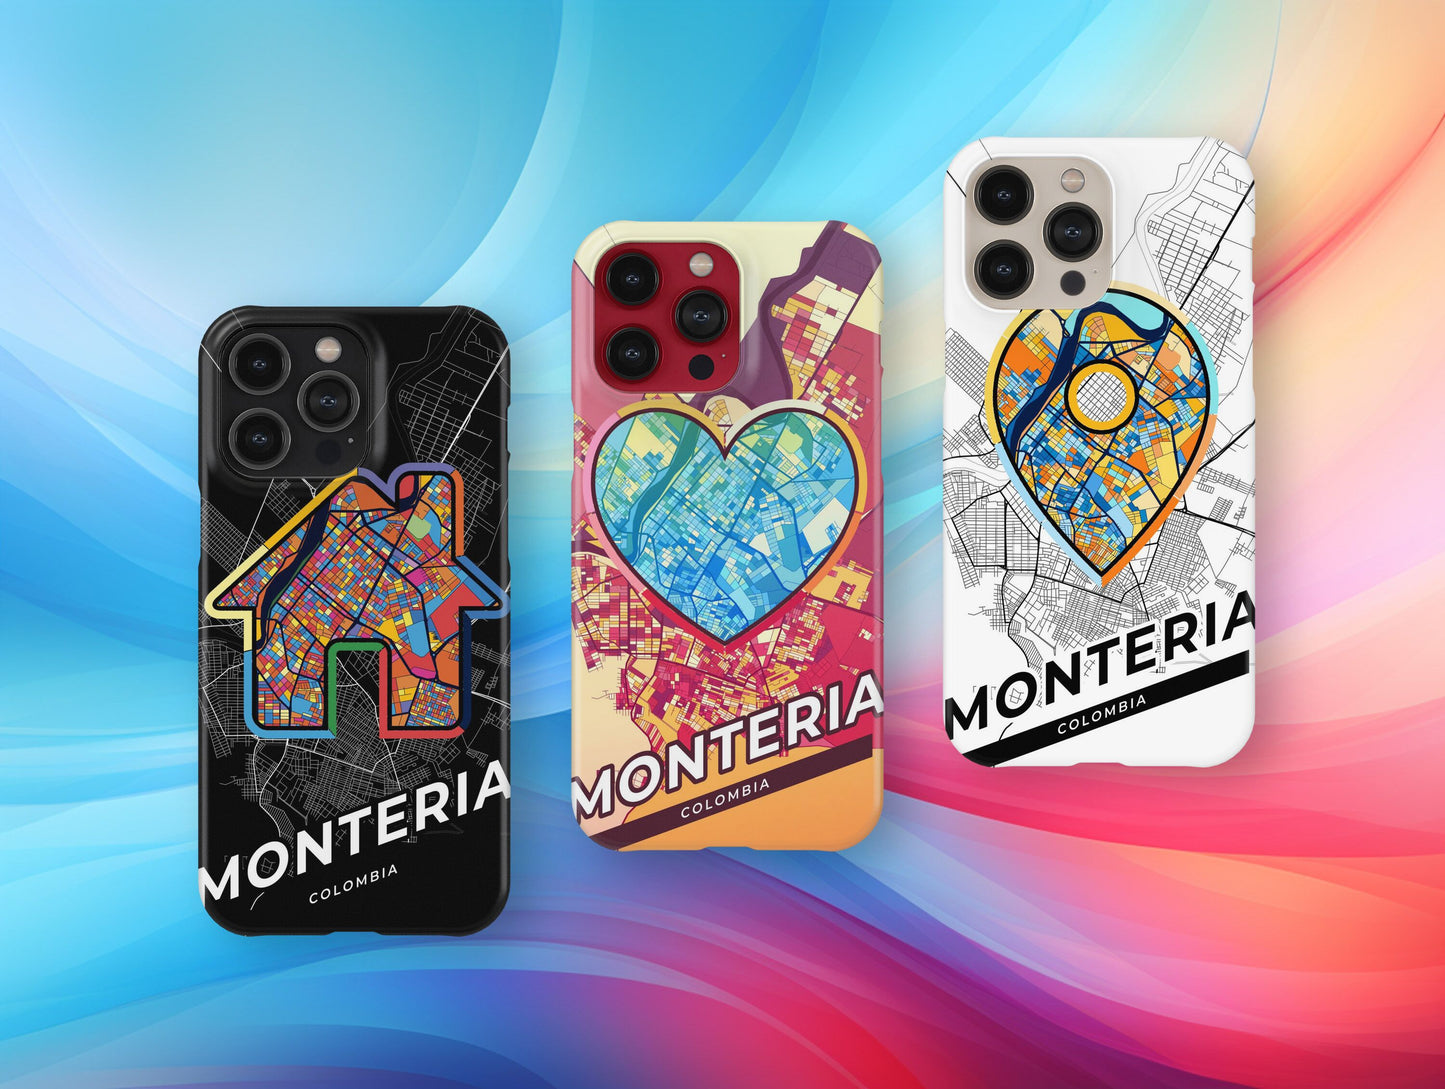 Monteria Colombia slim phone case with colorful icon